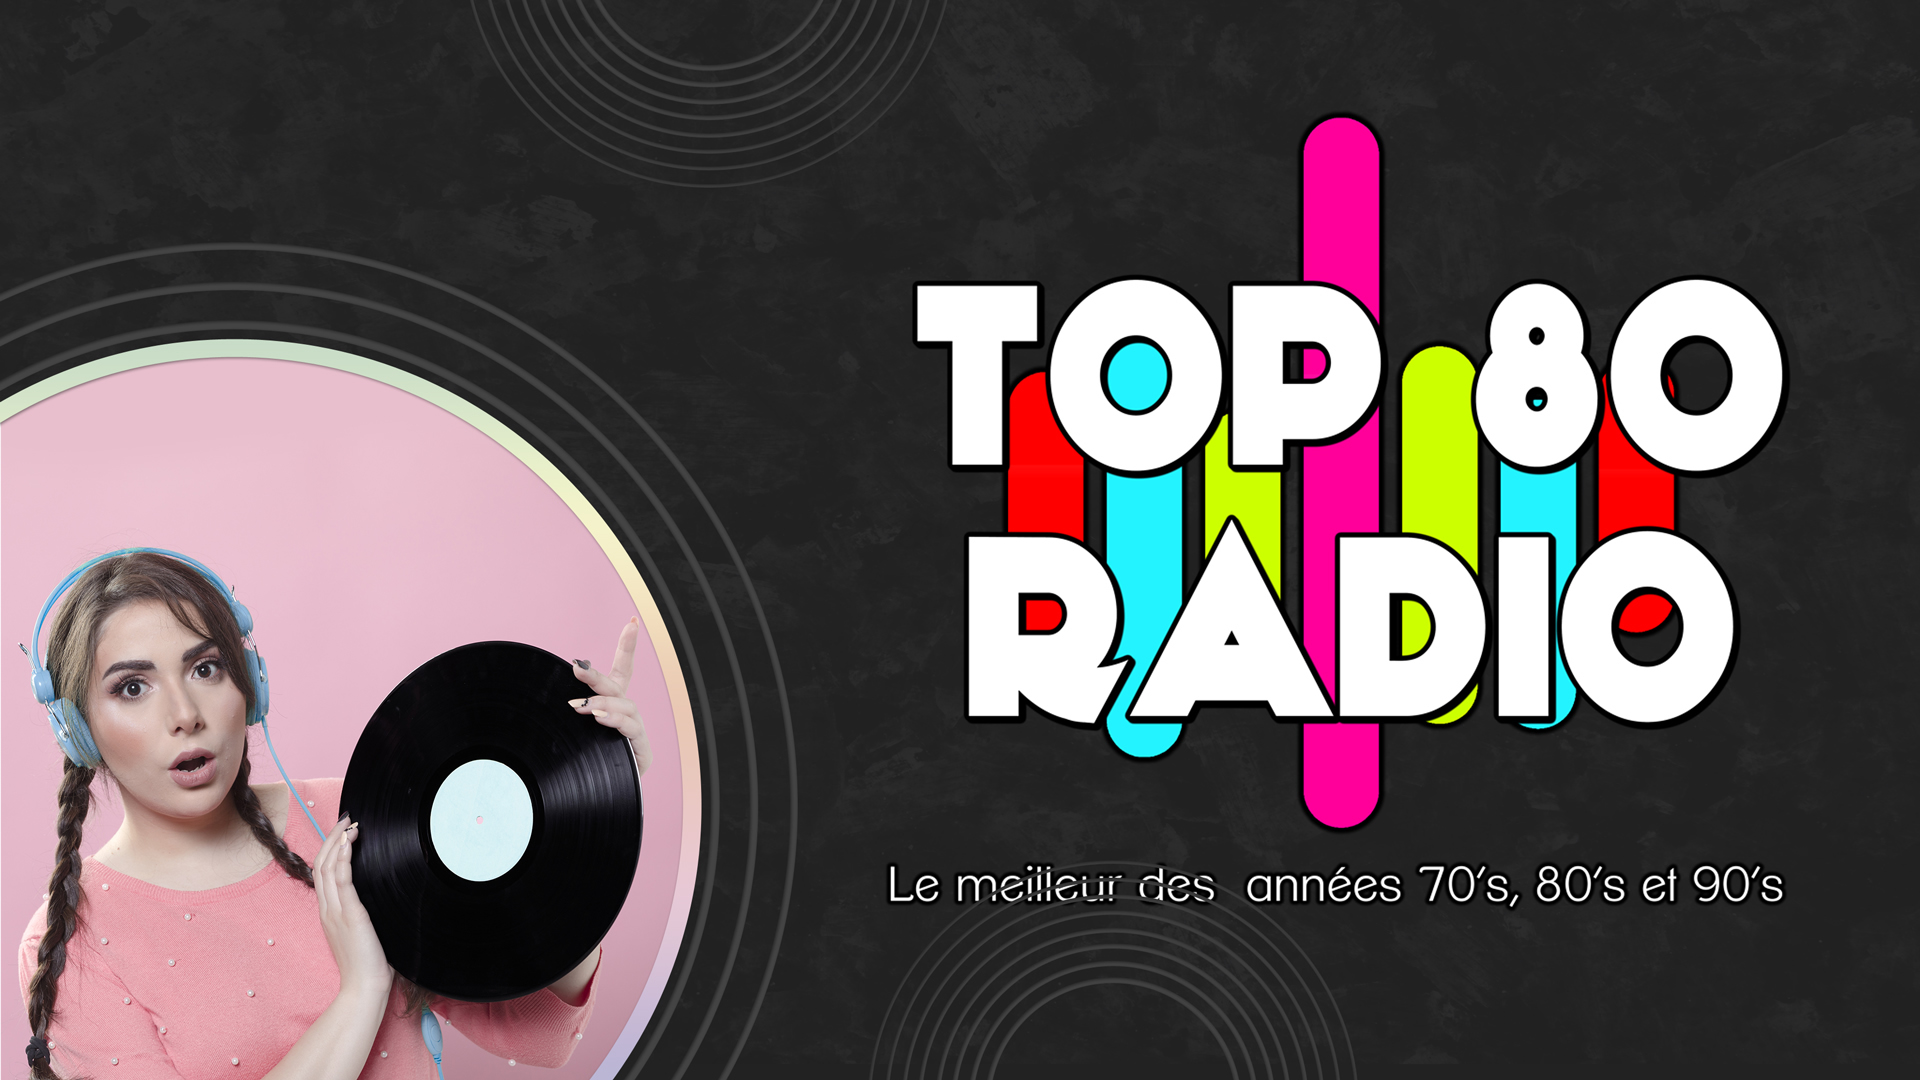 WALLPAPER–TOP-80-RADIO—23